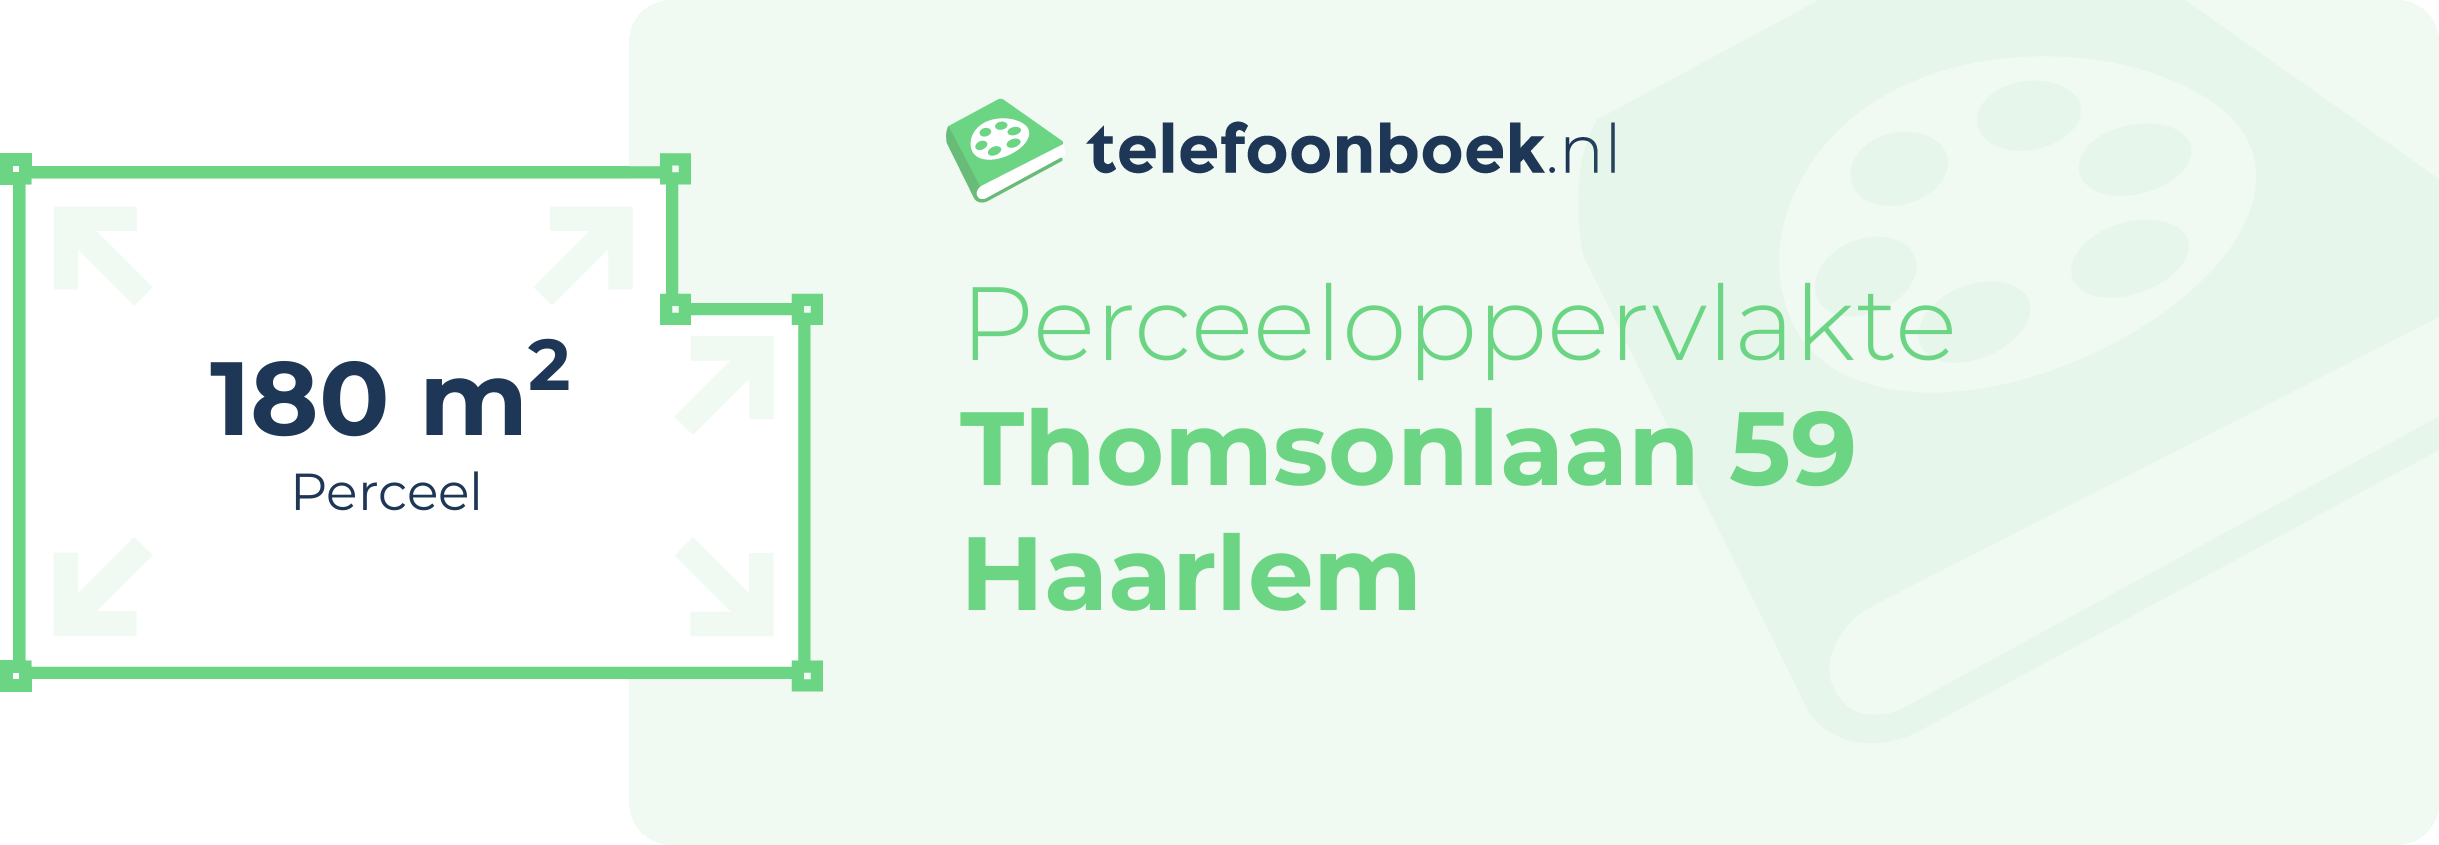 Perceeloppervlakte Thomsonlaan 59 Haarlem